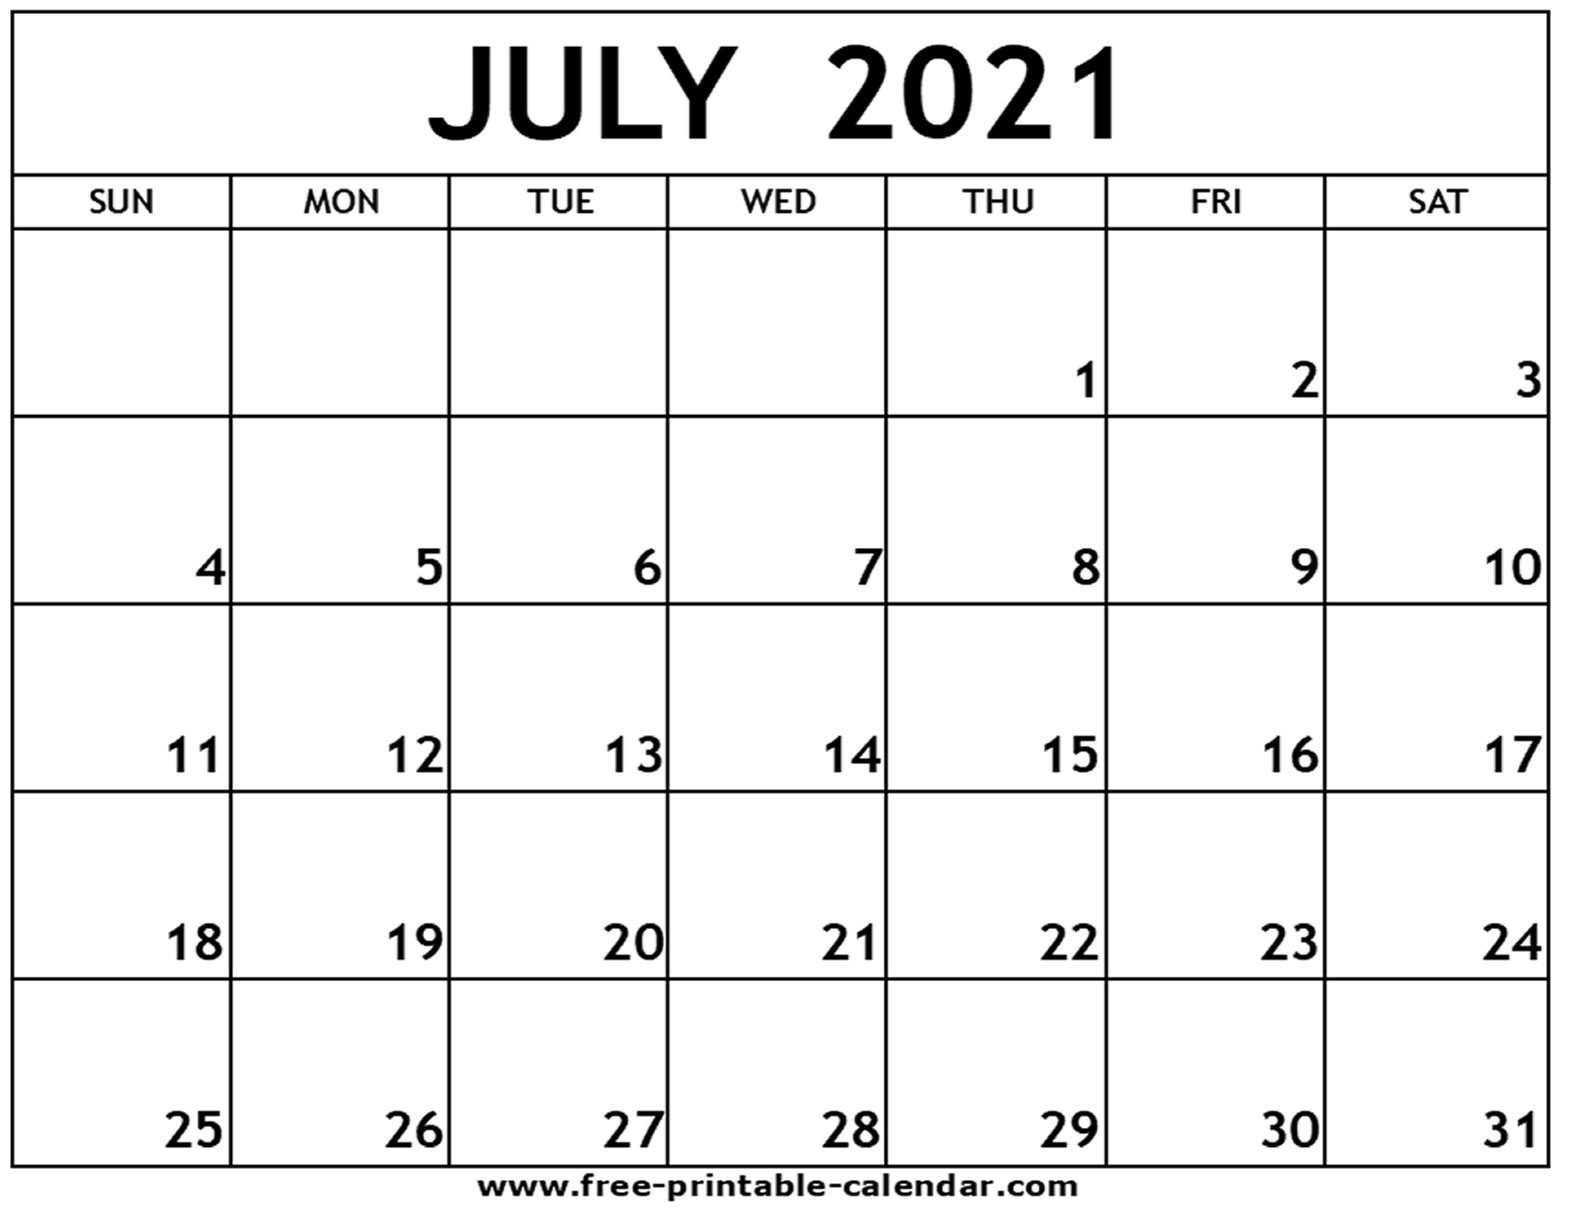 July 2021 Printable Calendar - Free-Printable-Calendar